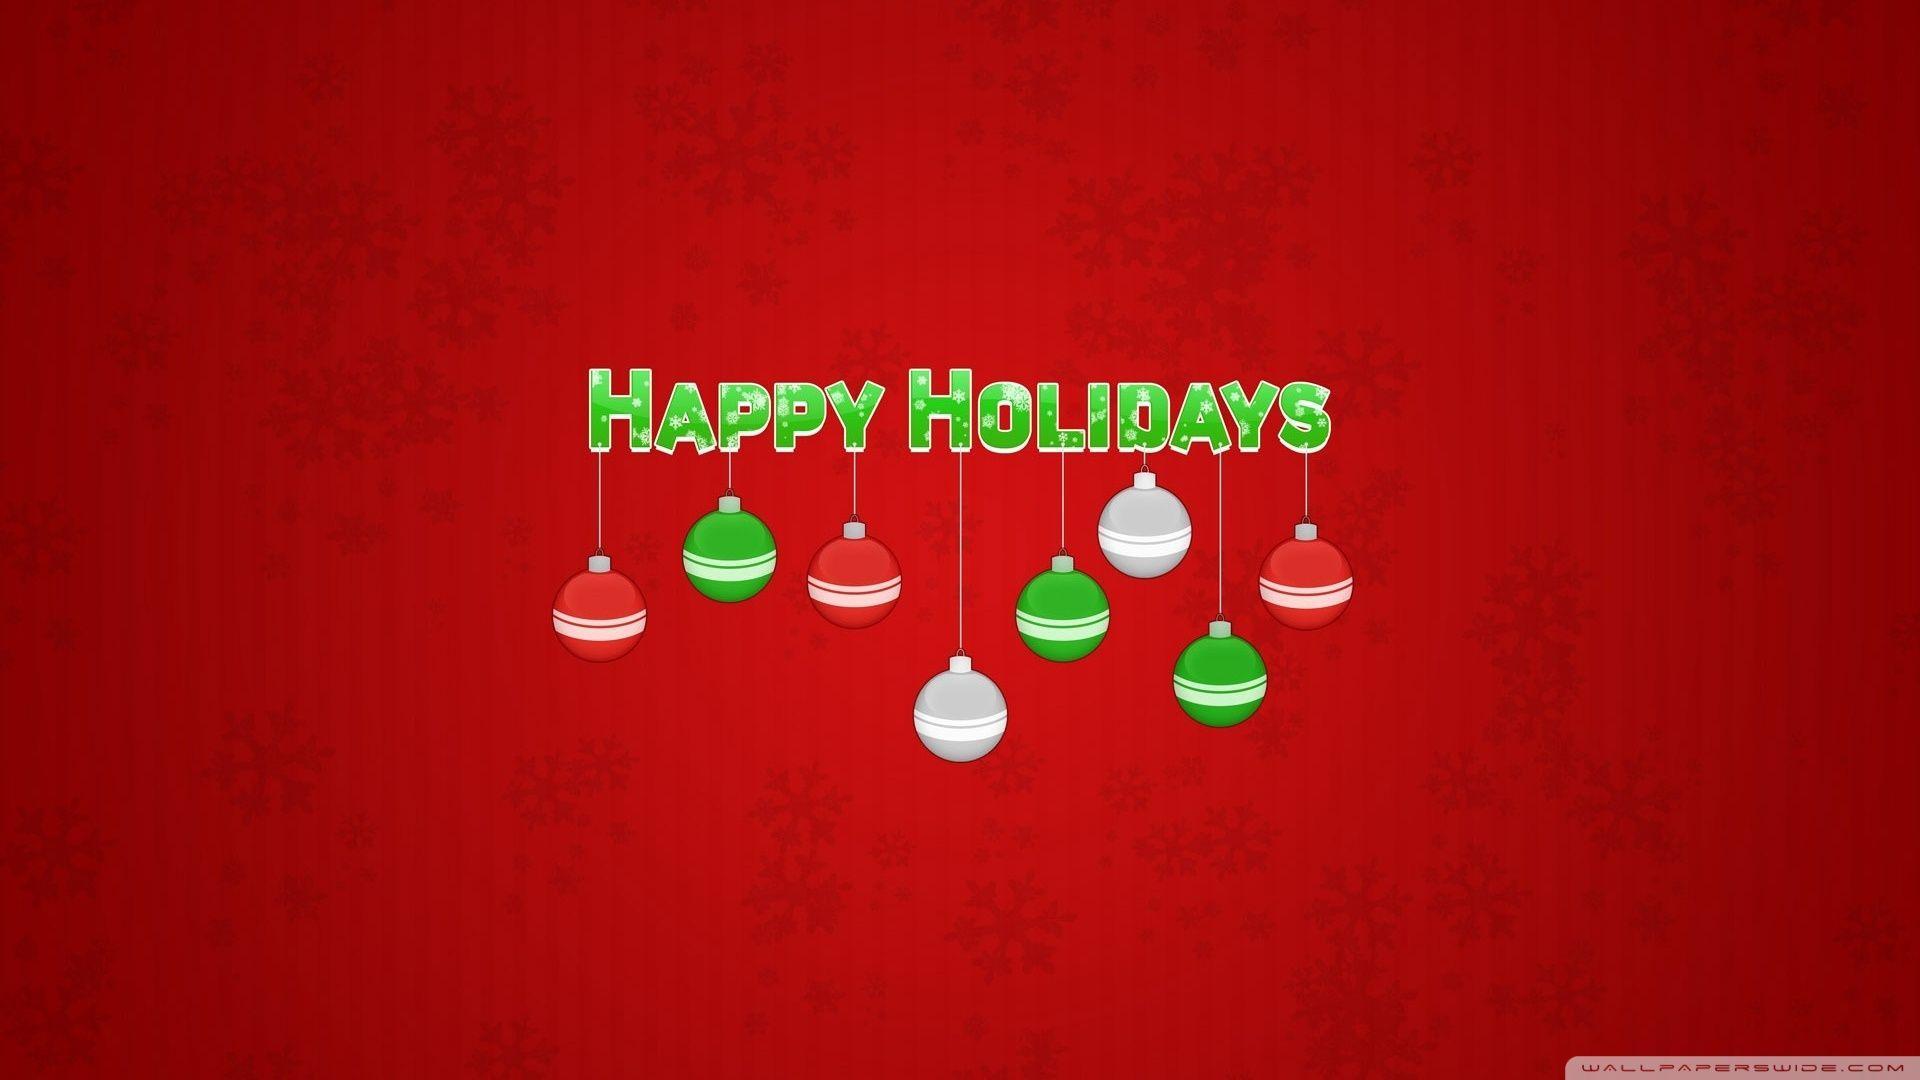 Happy Holidays Windows 8 Wallpaper. Download free windows 8 HD